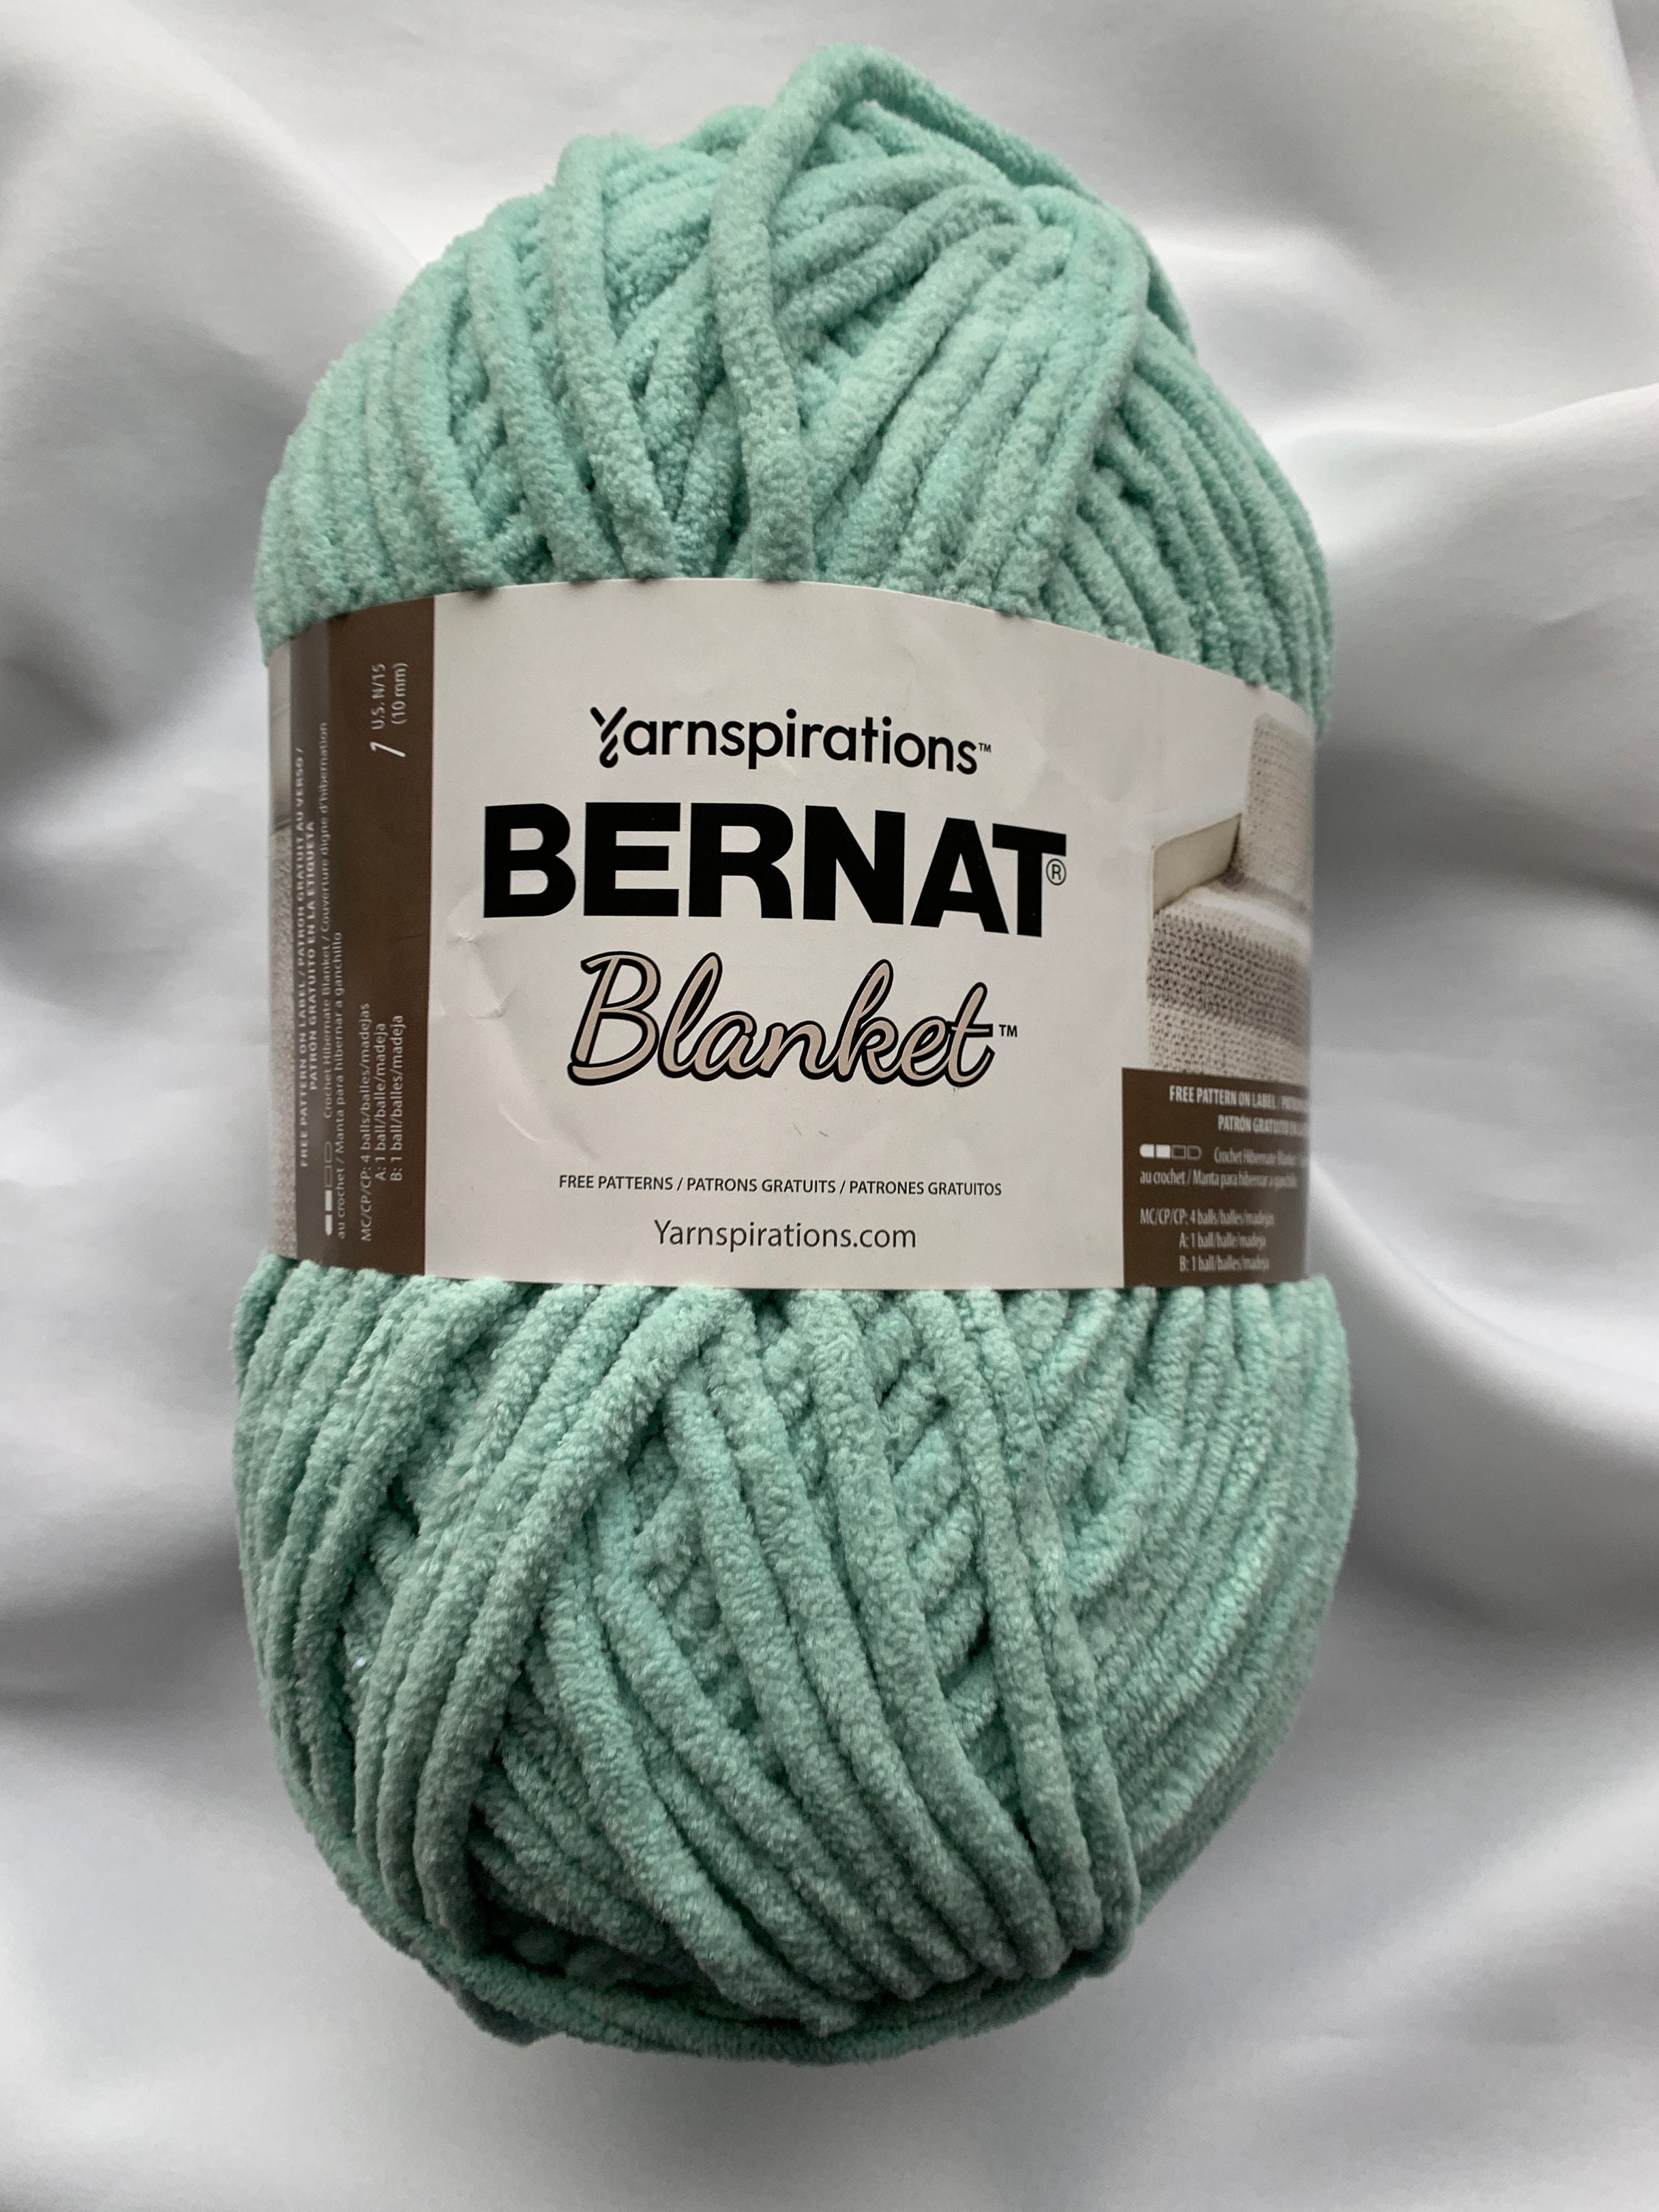 Bernat Blanket Big Ball Yarn-Misty Green, 1 count - Baker's